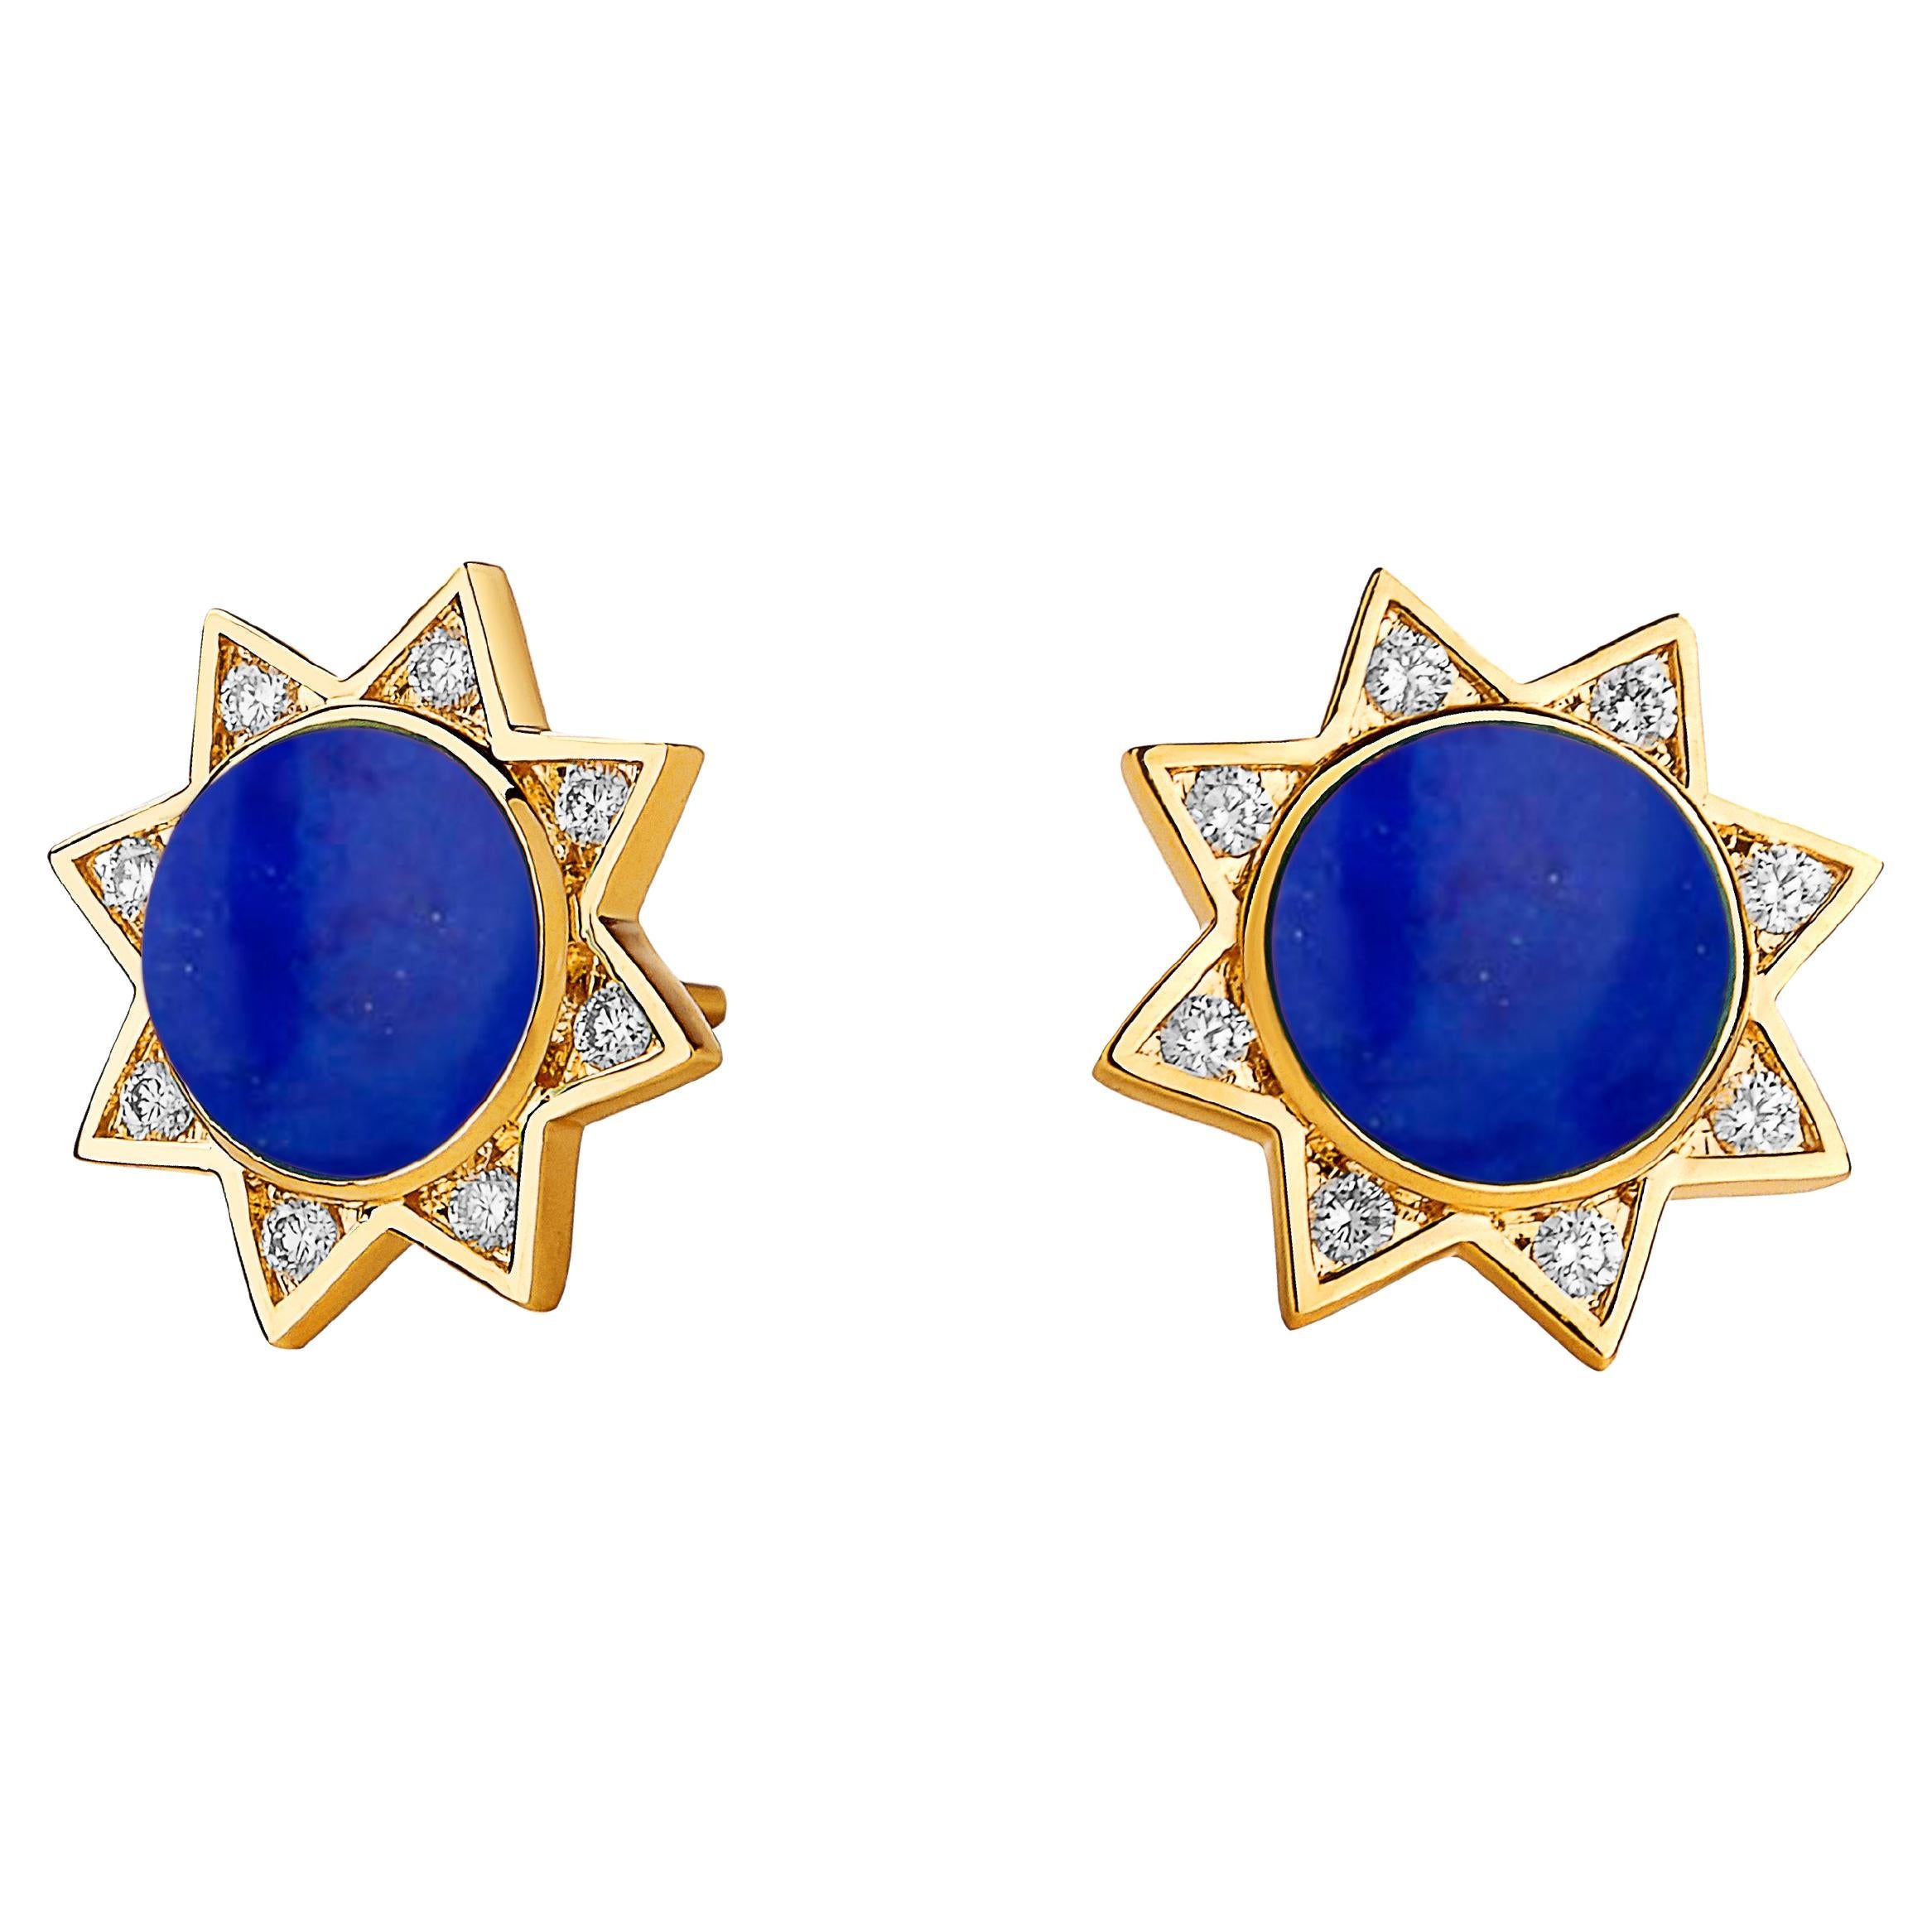 Syna Cosmic Star Studs with Lapis Lazuli and Diamonds